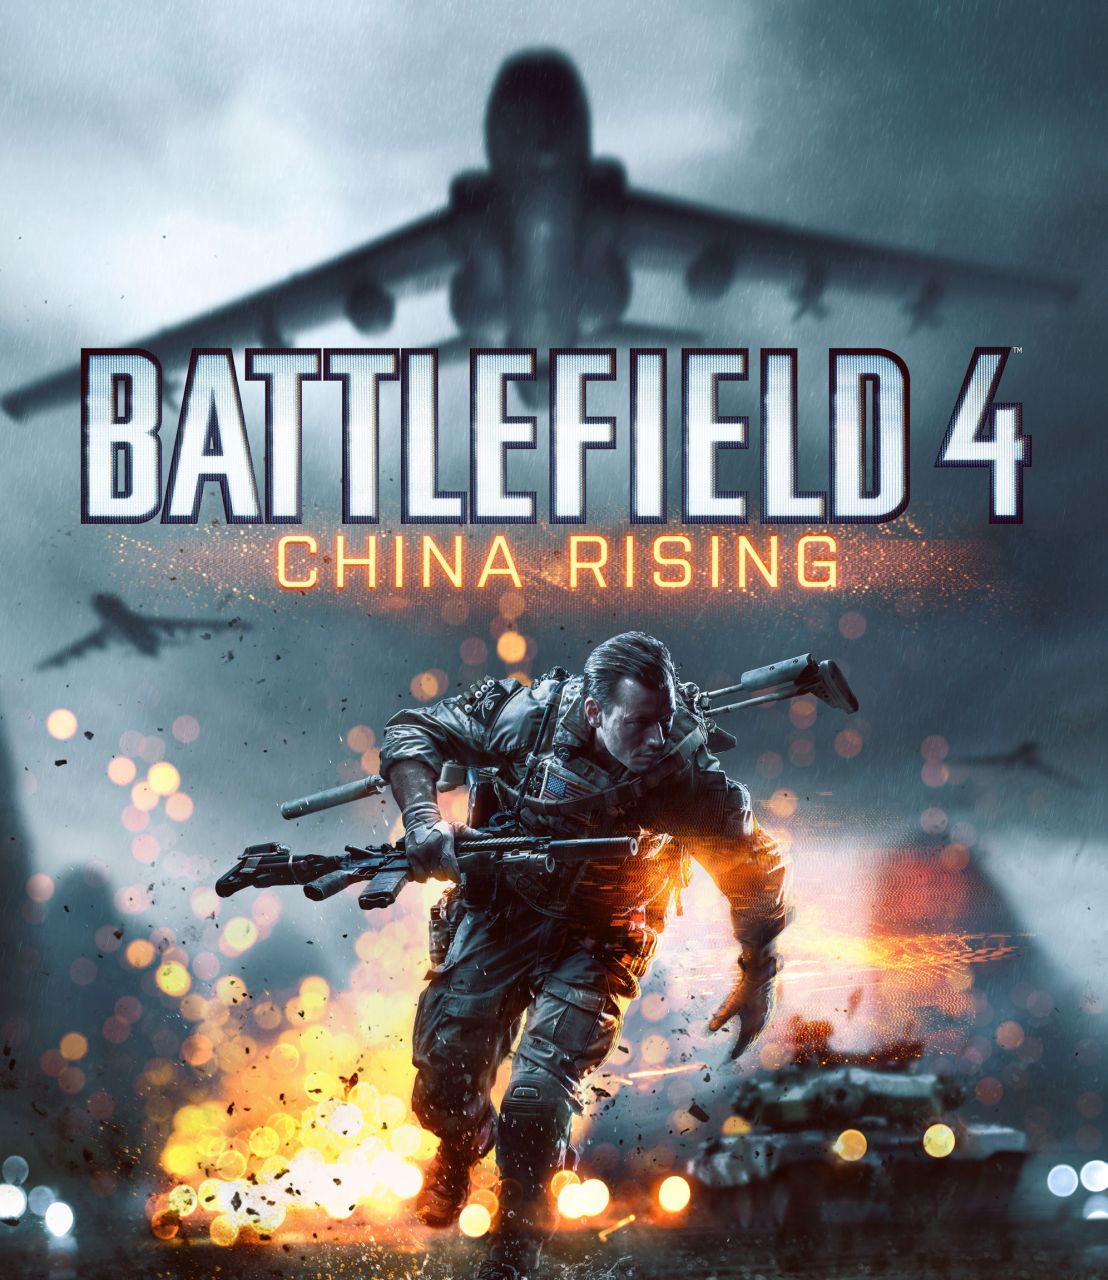 Battlefield-4-China-Rising-DLC-Will-Arrive-on-December-3-395264-2.jpg